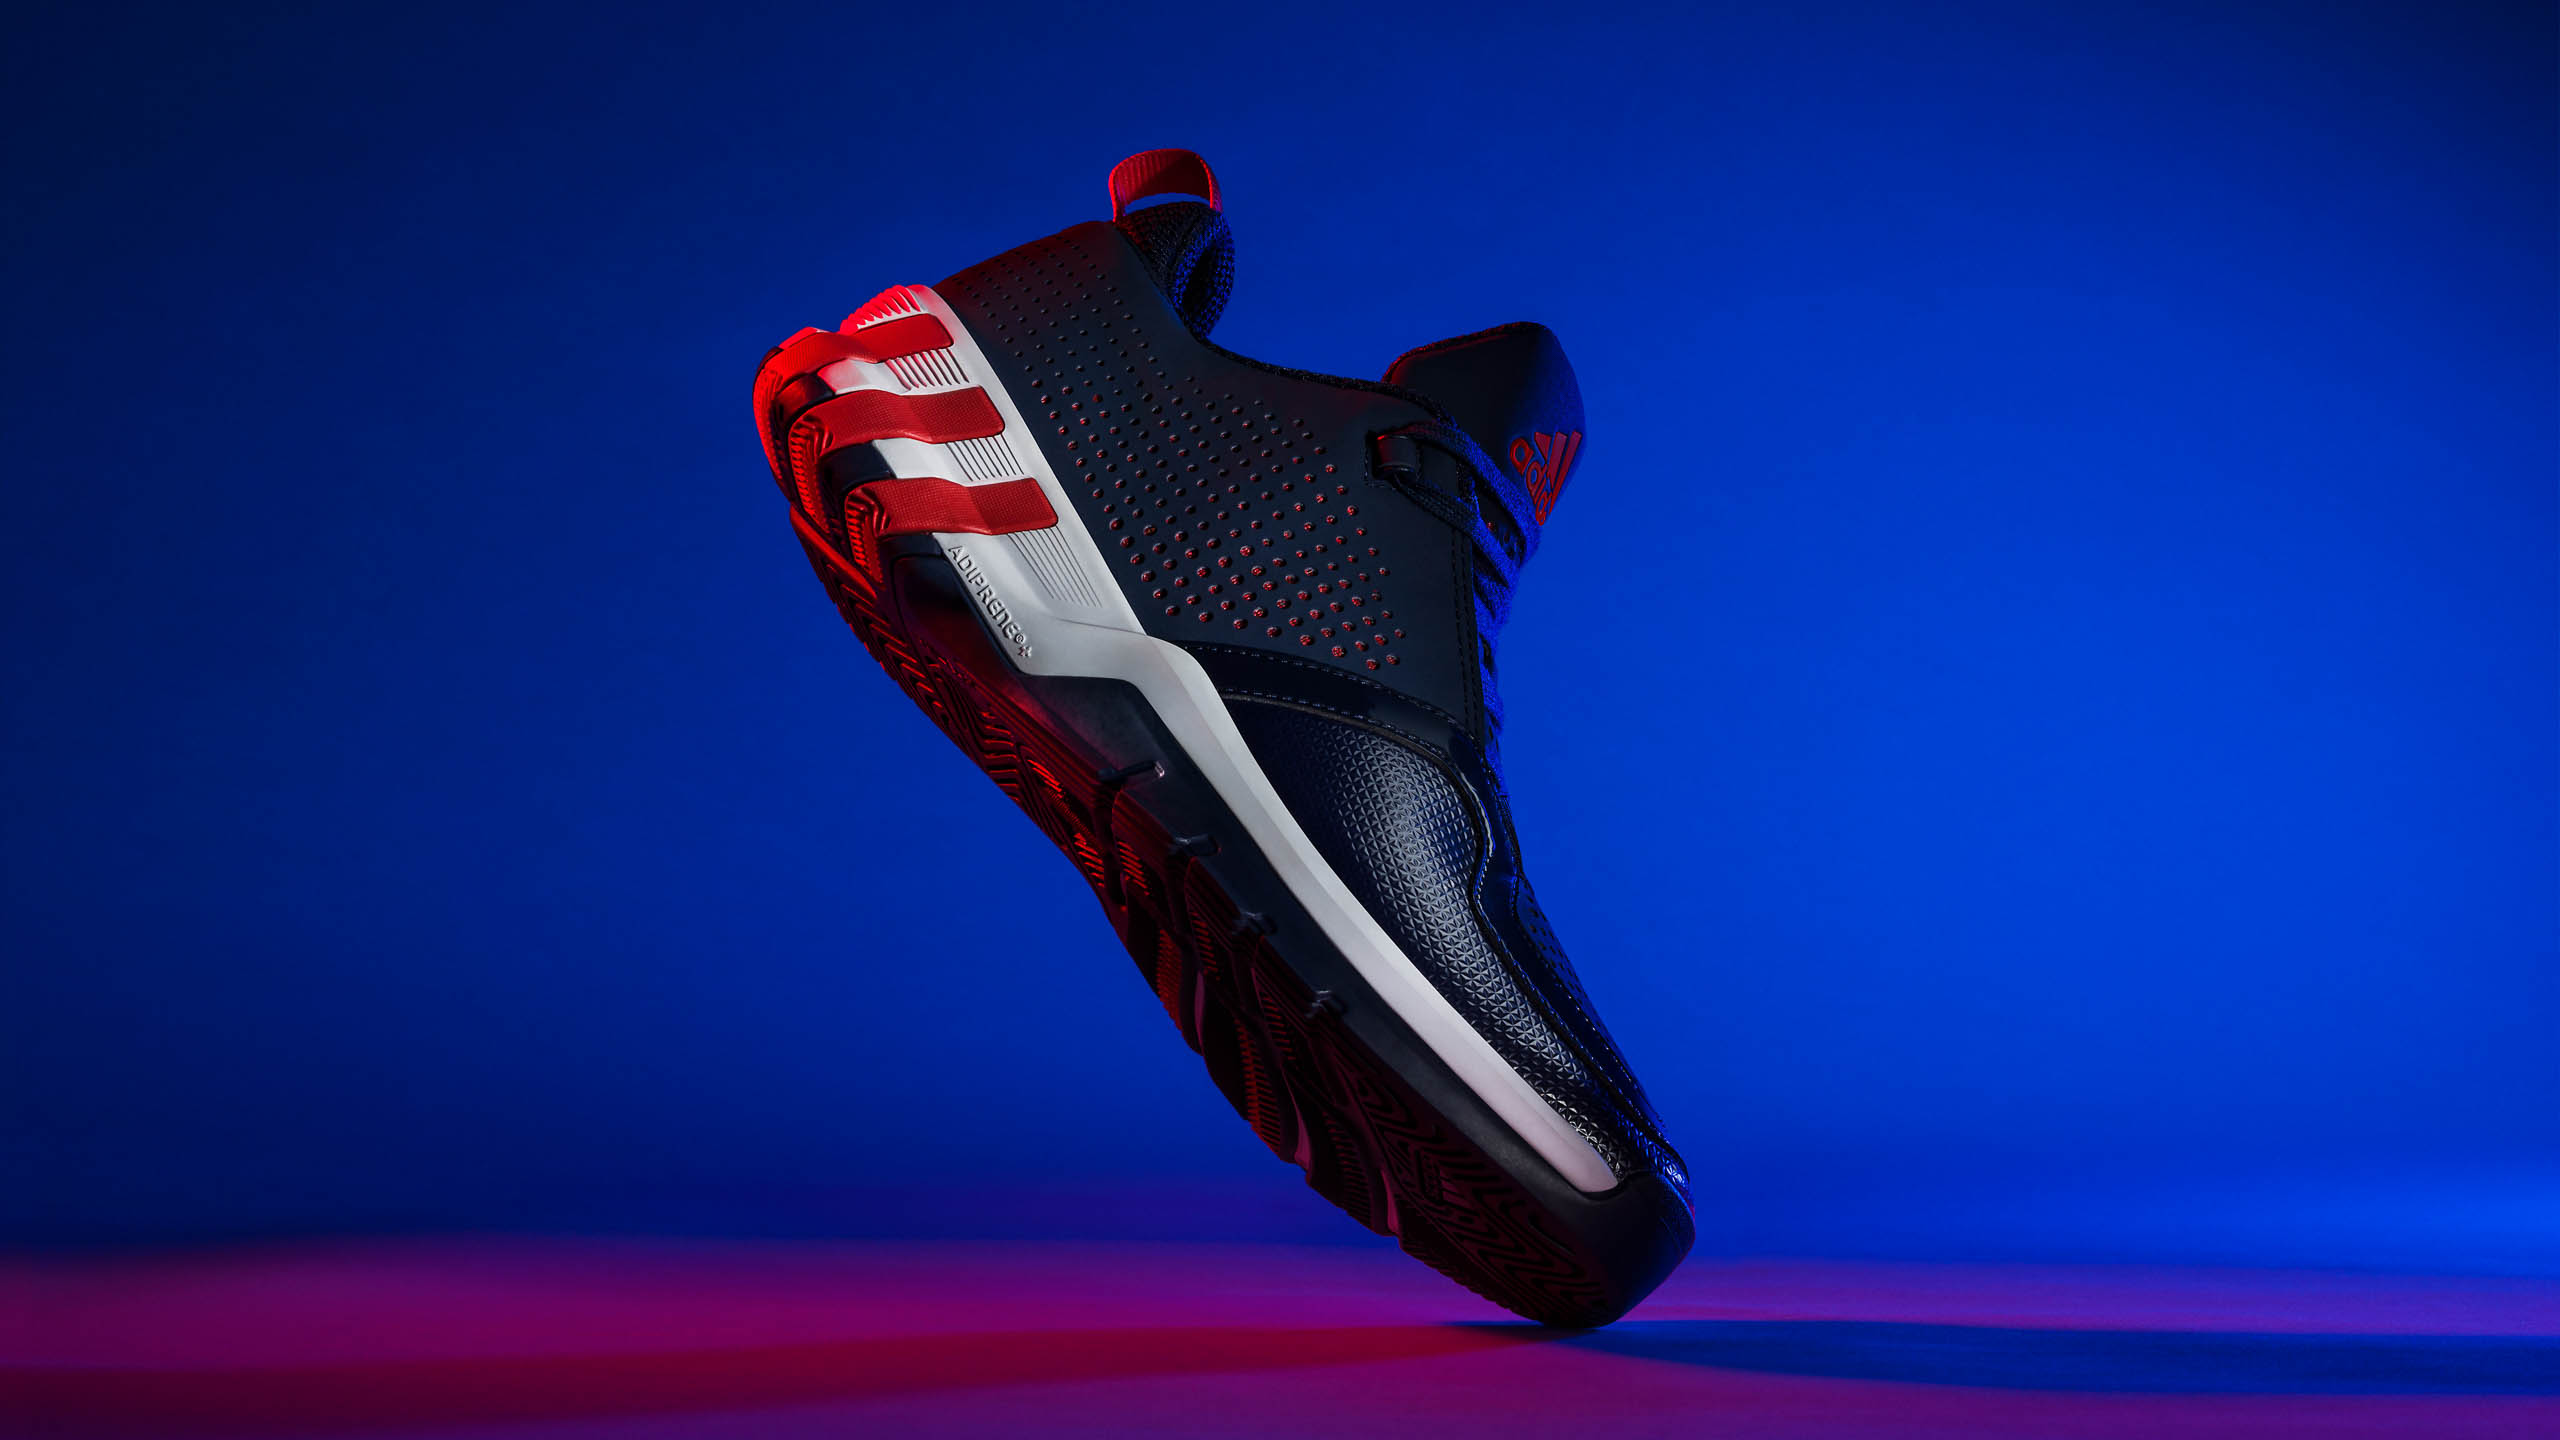 Adidas John Wall 2 basketball shoe